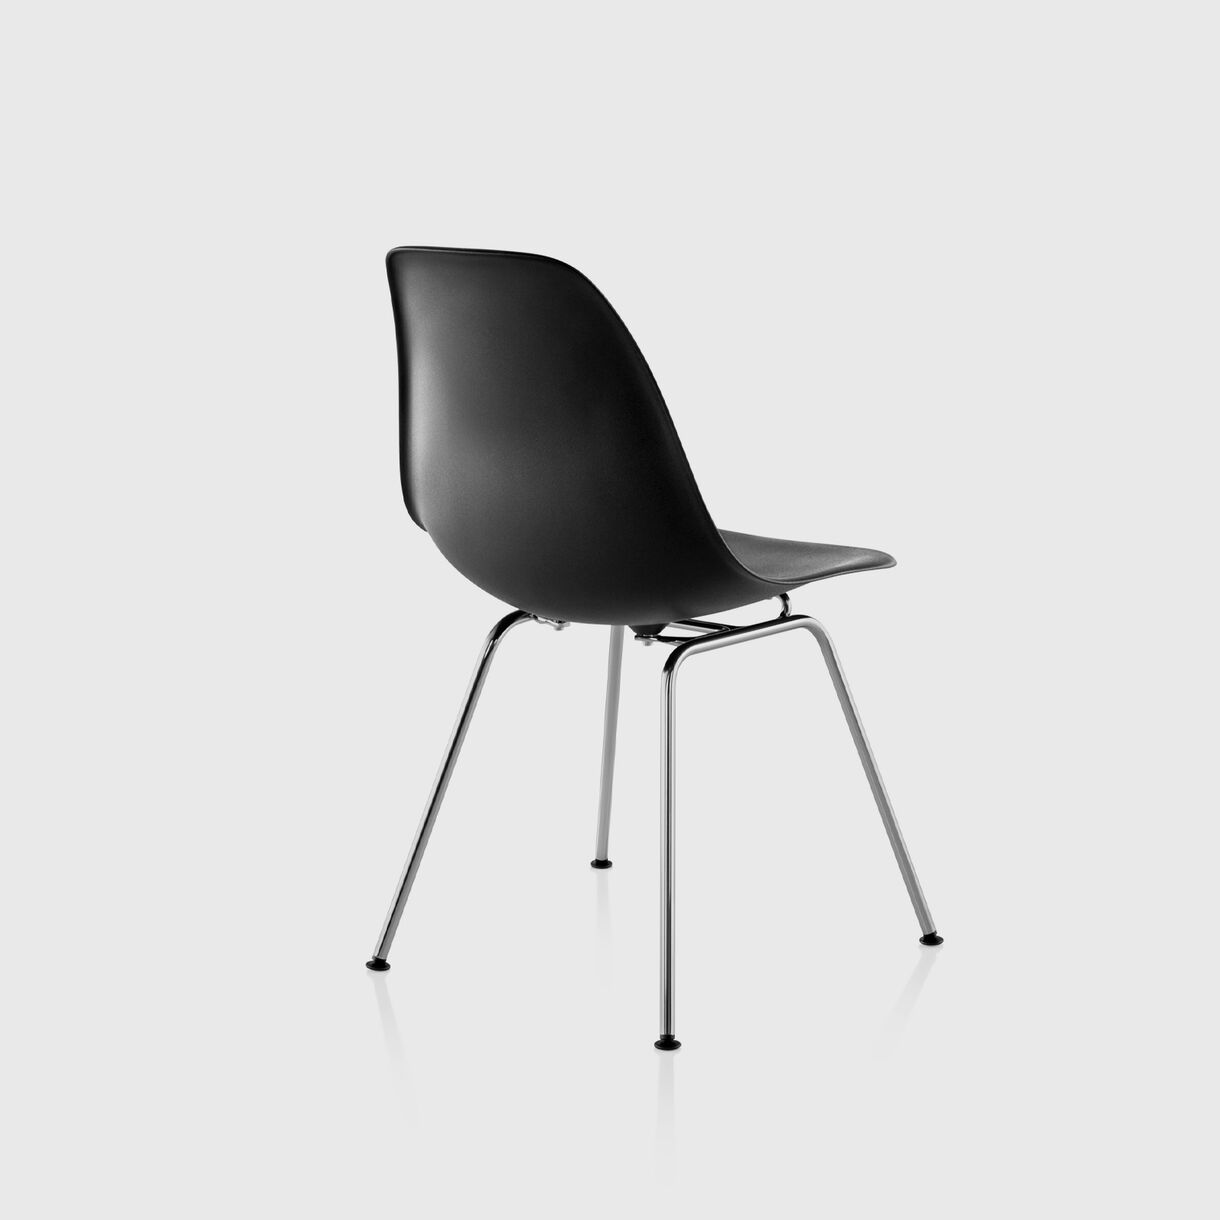 Eames Moulded Plastic Side Chair 4-Leg, Black, Chrome